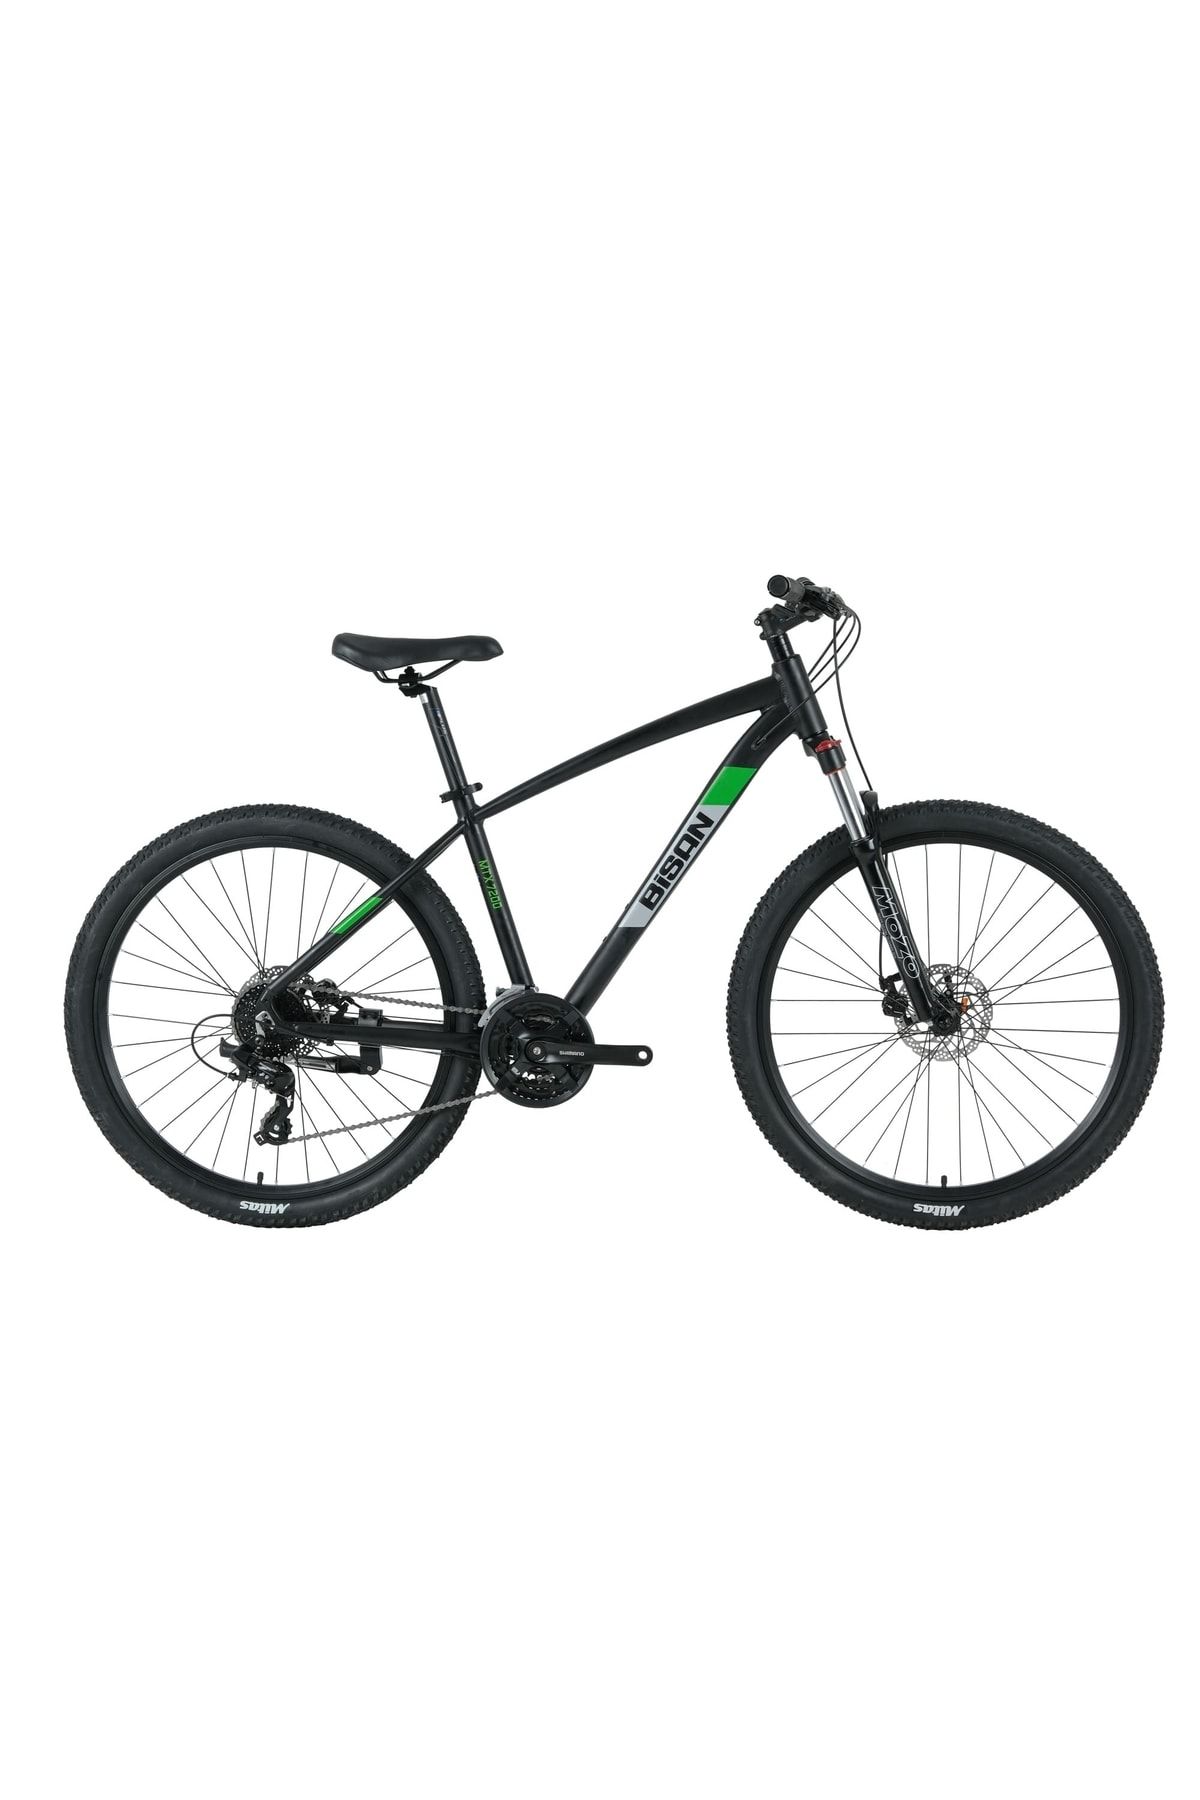 Bisan Mtx 7200 Dağ Bisikleti | 17" Kadro | 29" Jant | Siyah-yeşil